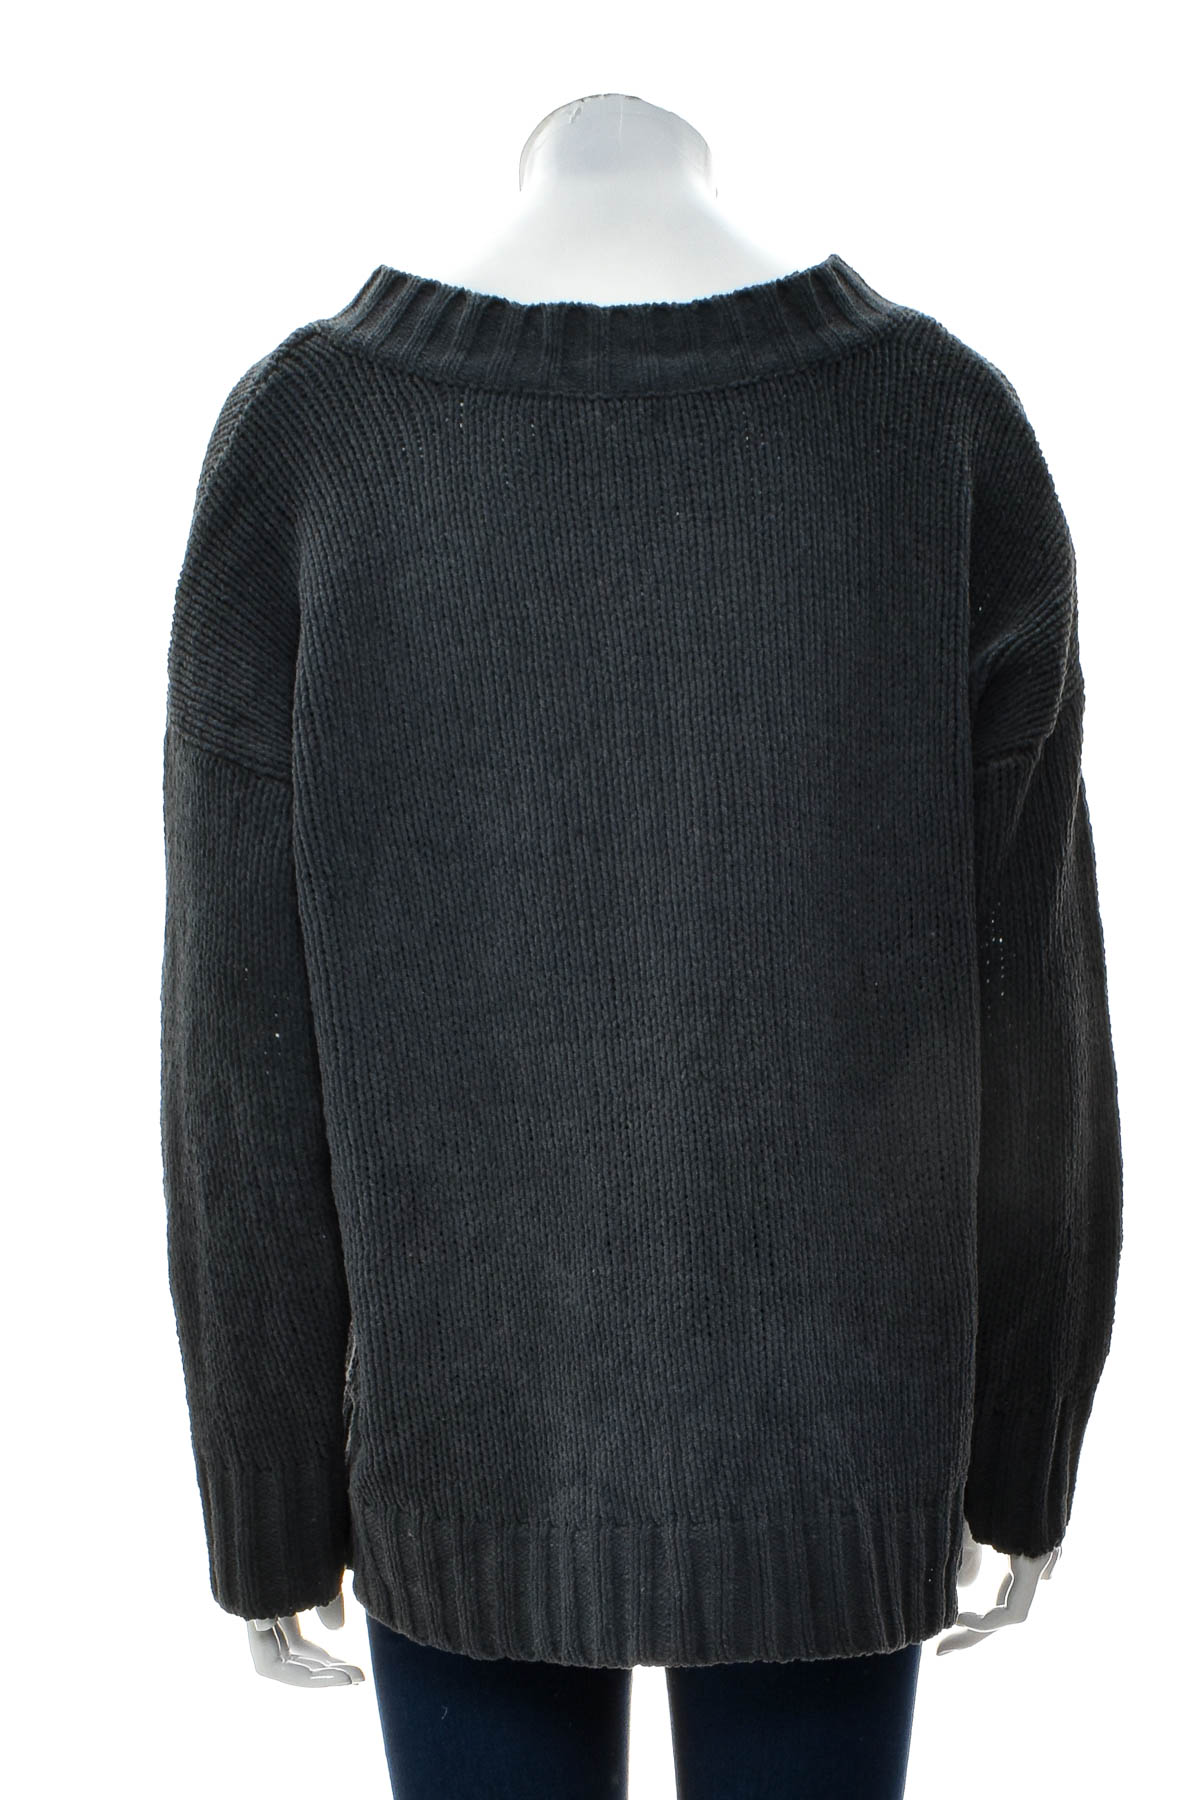 Women's sweater - Aerie - 1